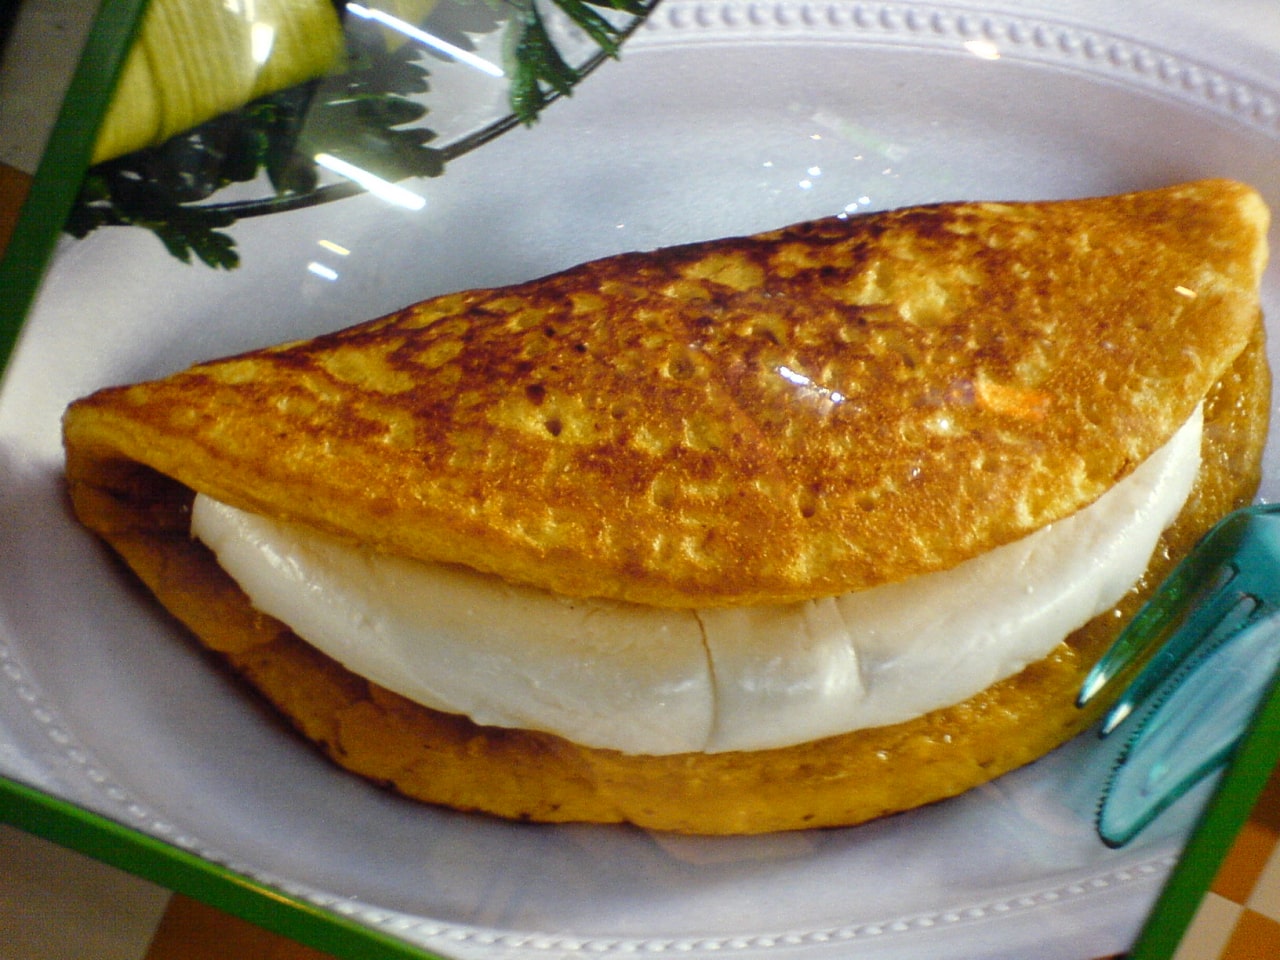 Cachapa accompanied with telita cheese